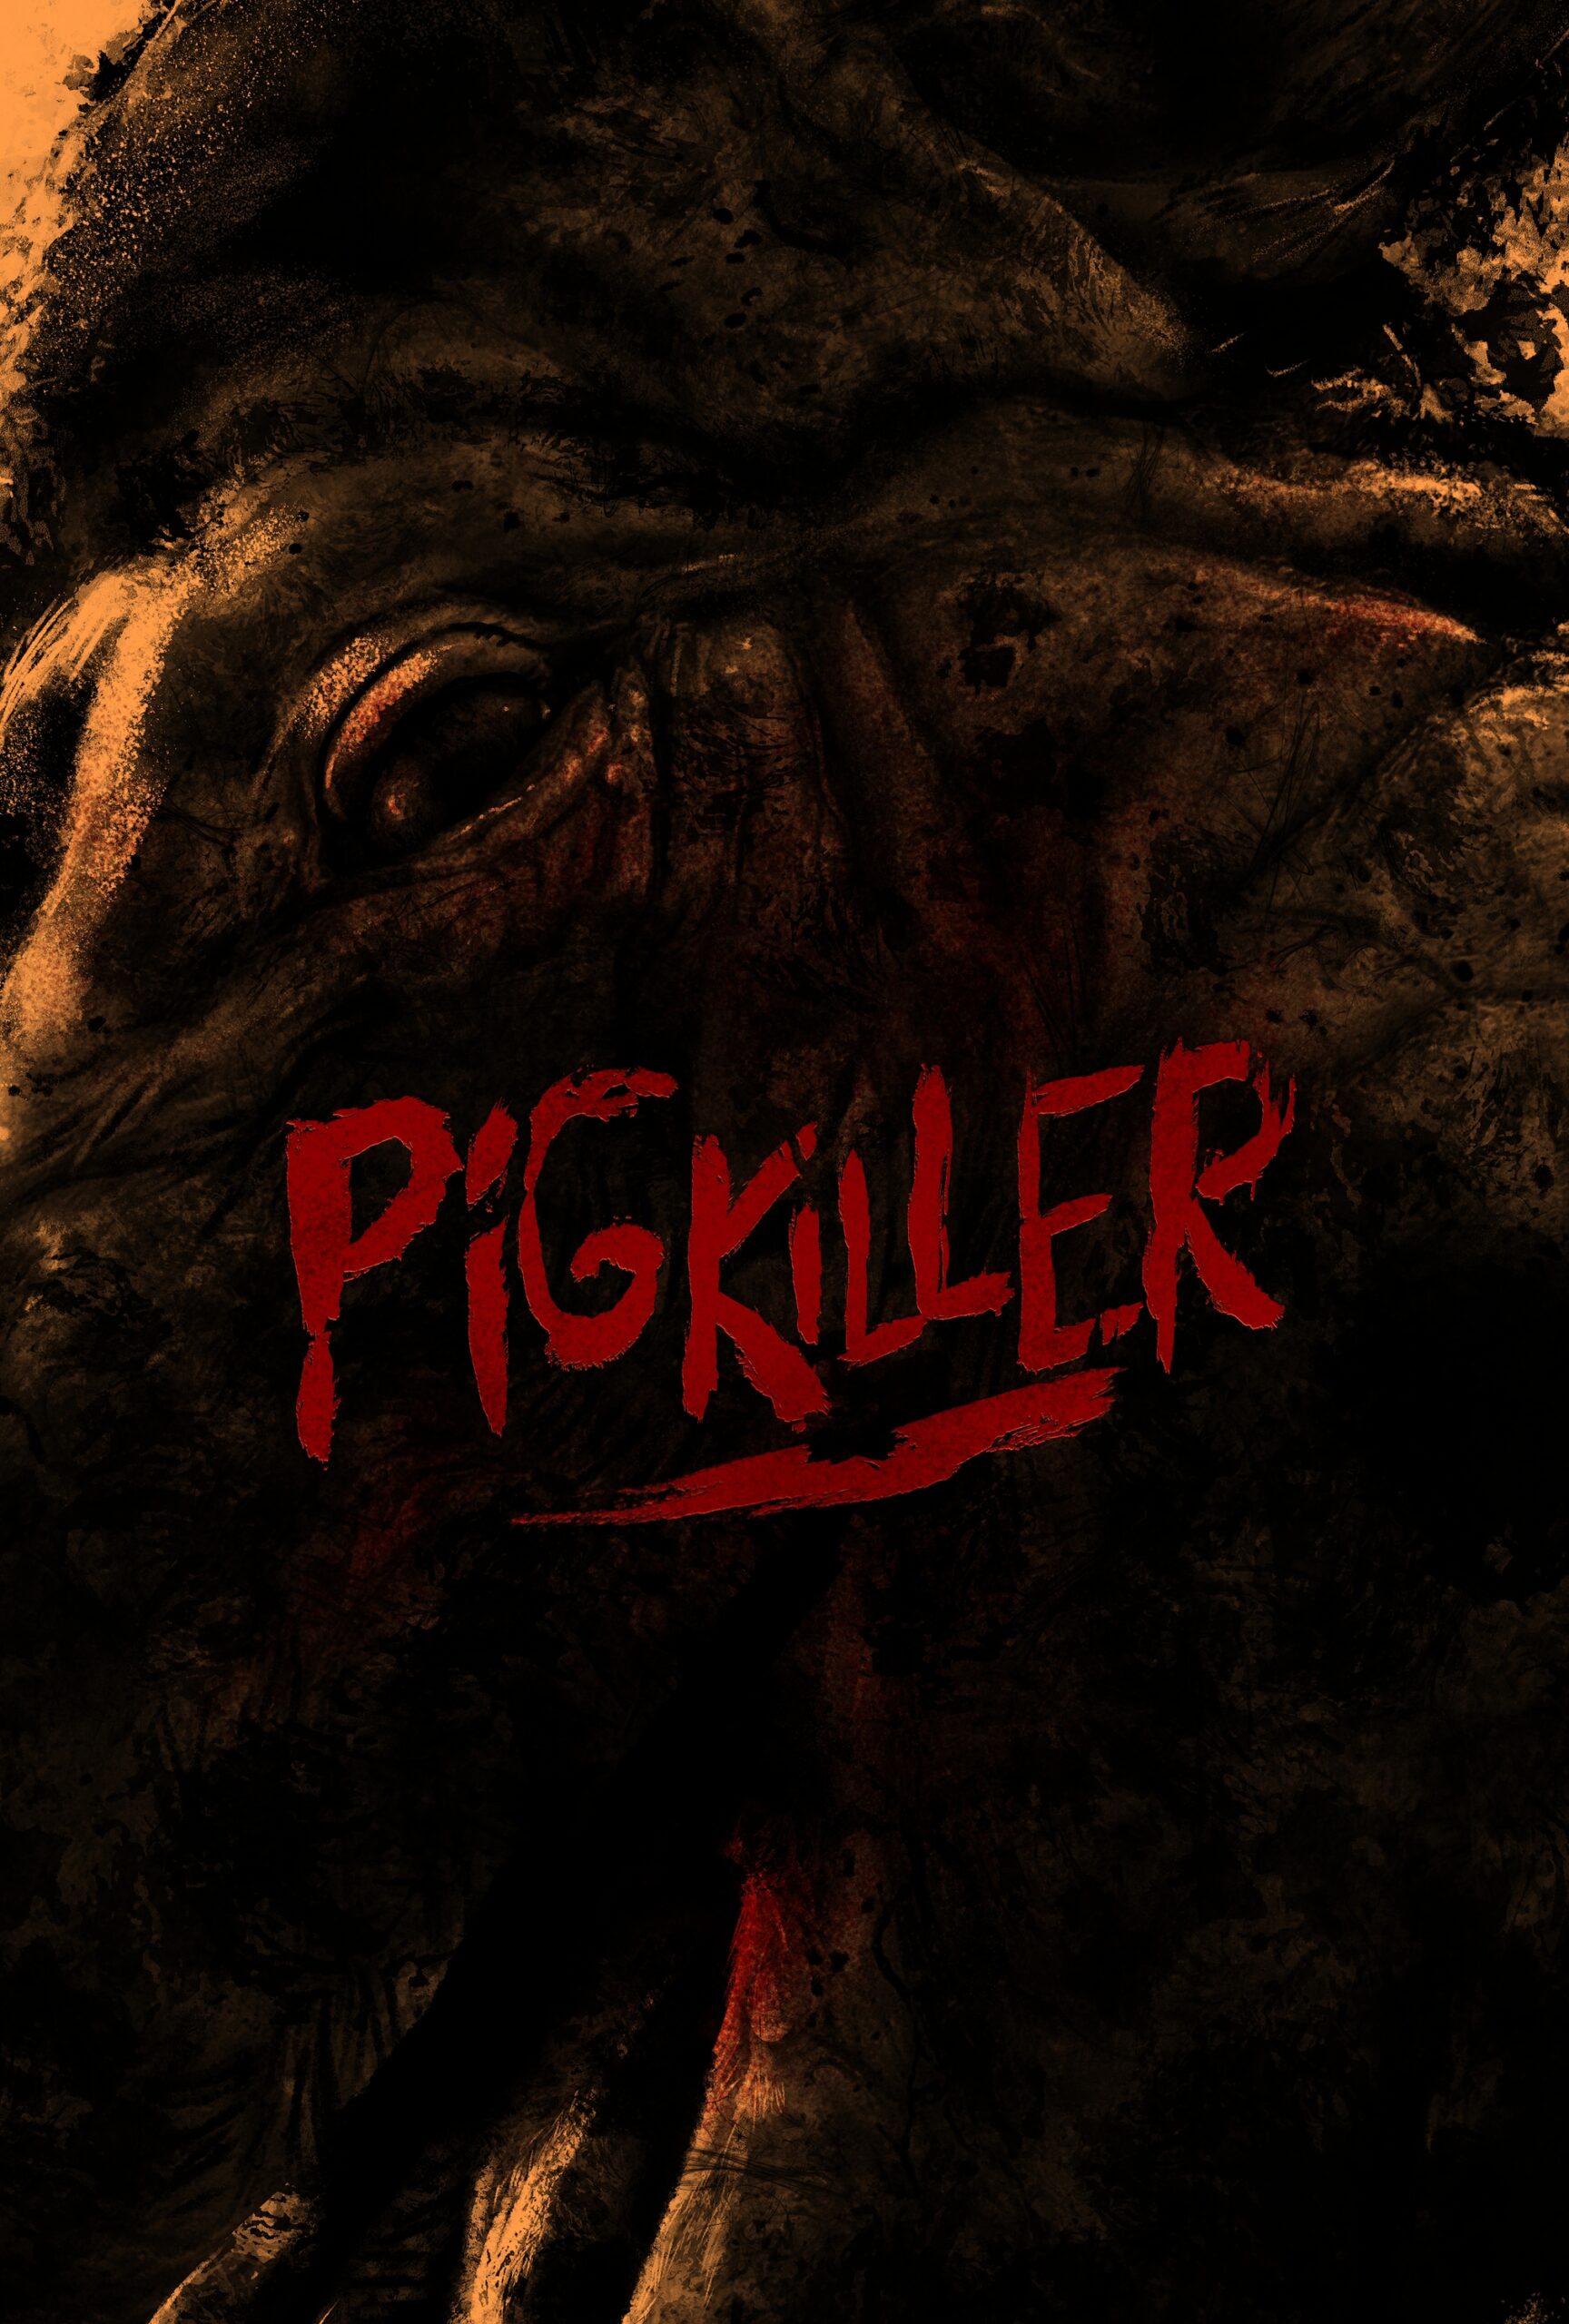 [NEWS] Il trailer di Pig Killer, sull’assassino Robert Pickton